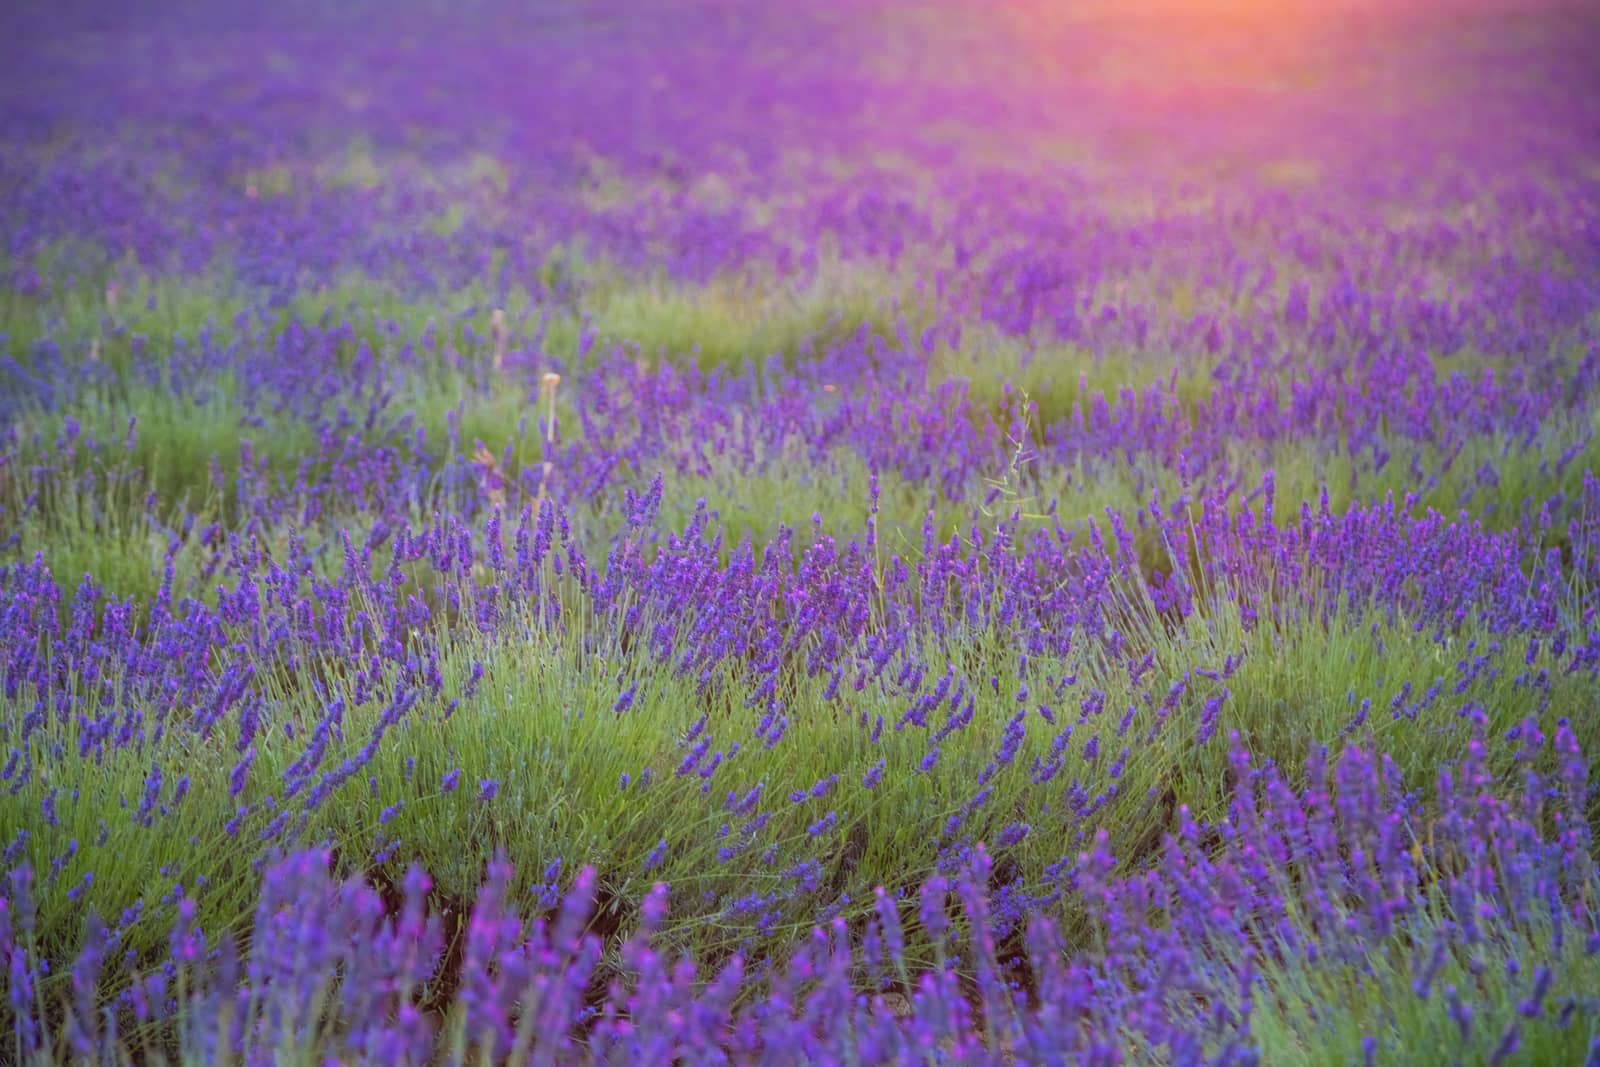 Lavender field in a beautiful sunset